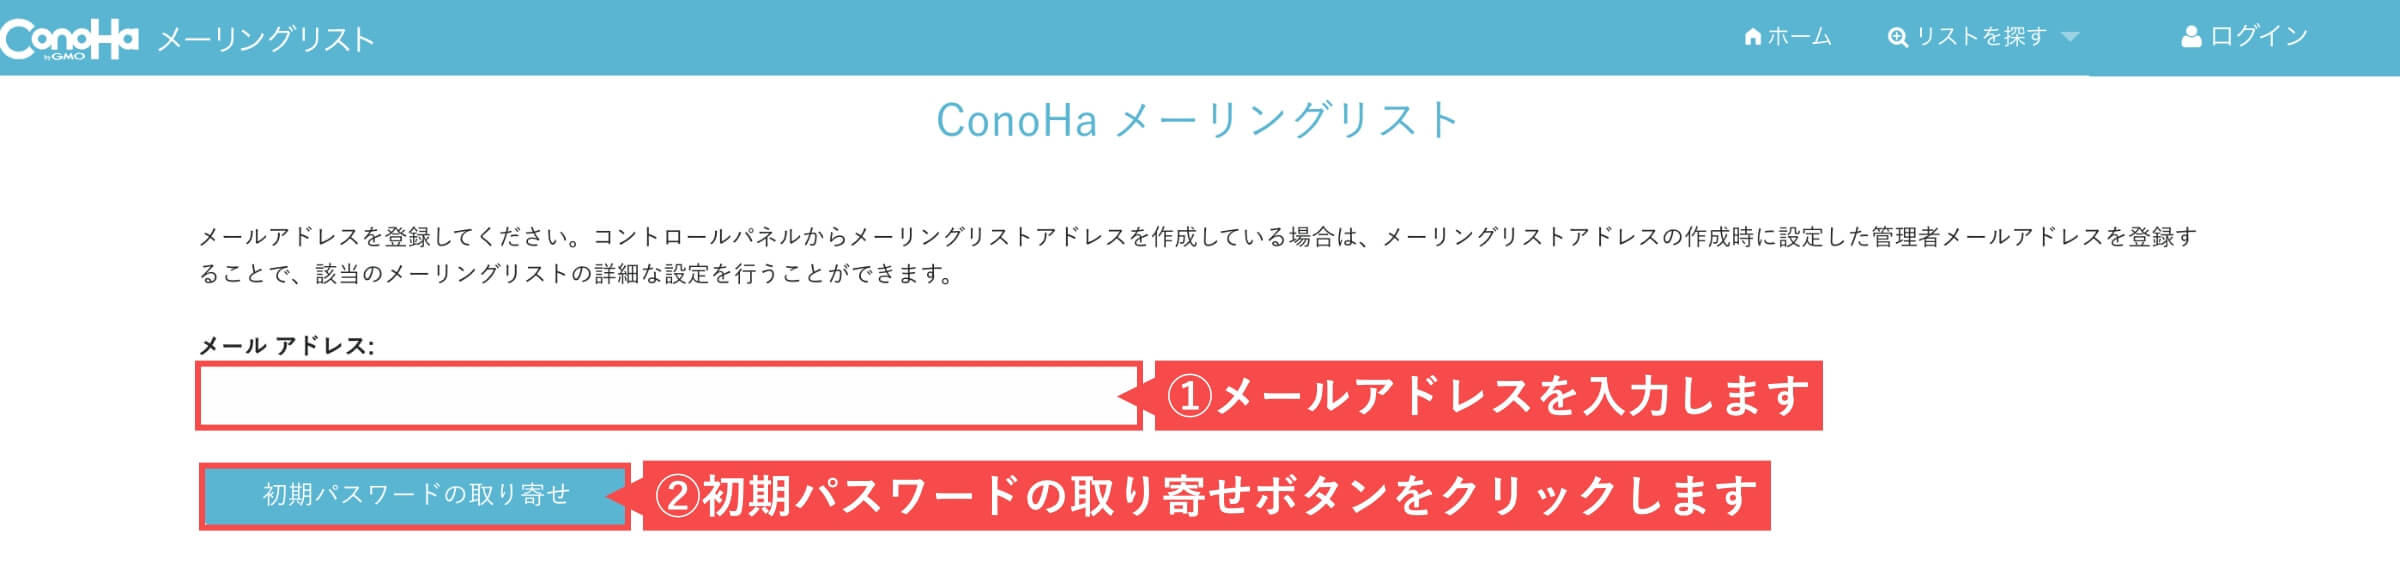 ConoHa WINGのメーリングリストのアカウント登録画面